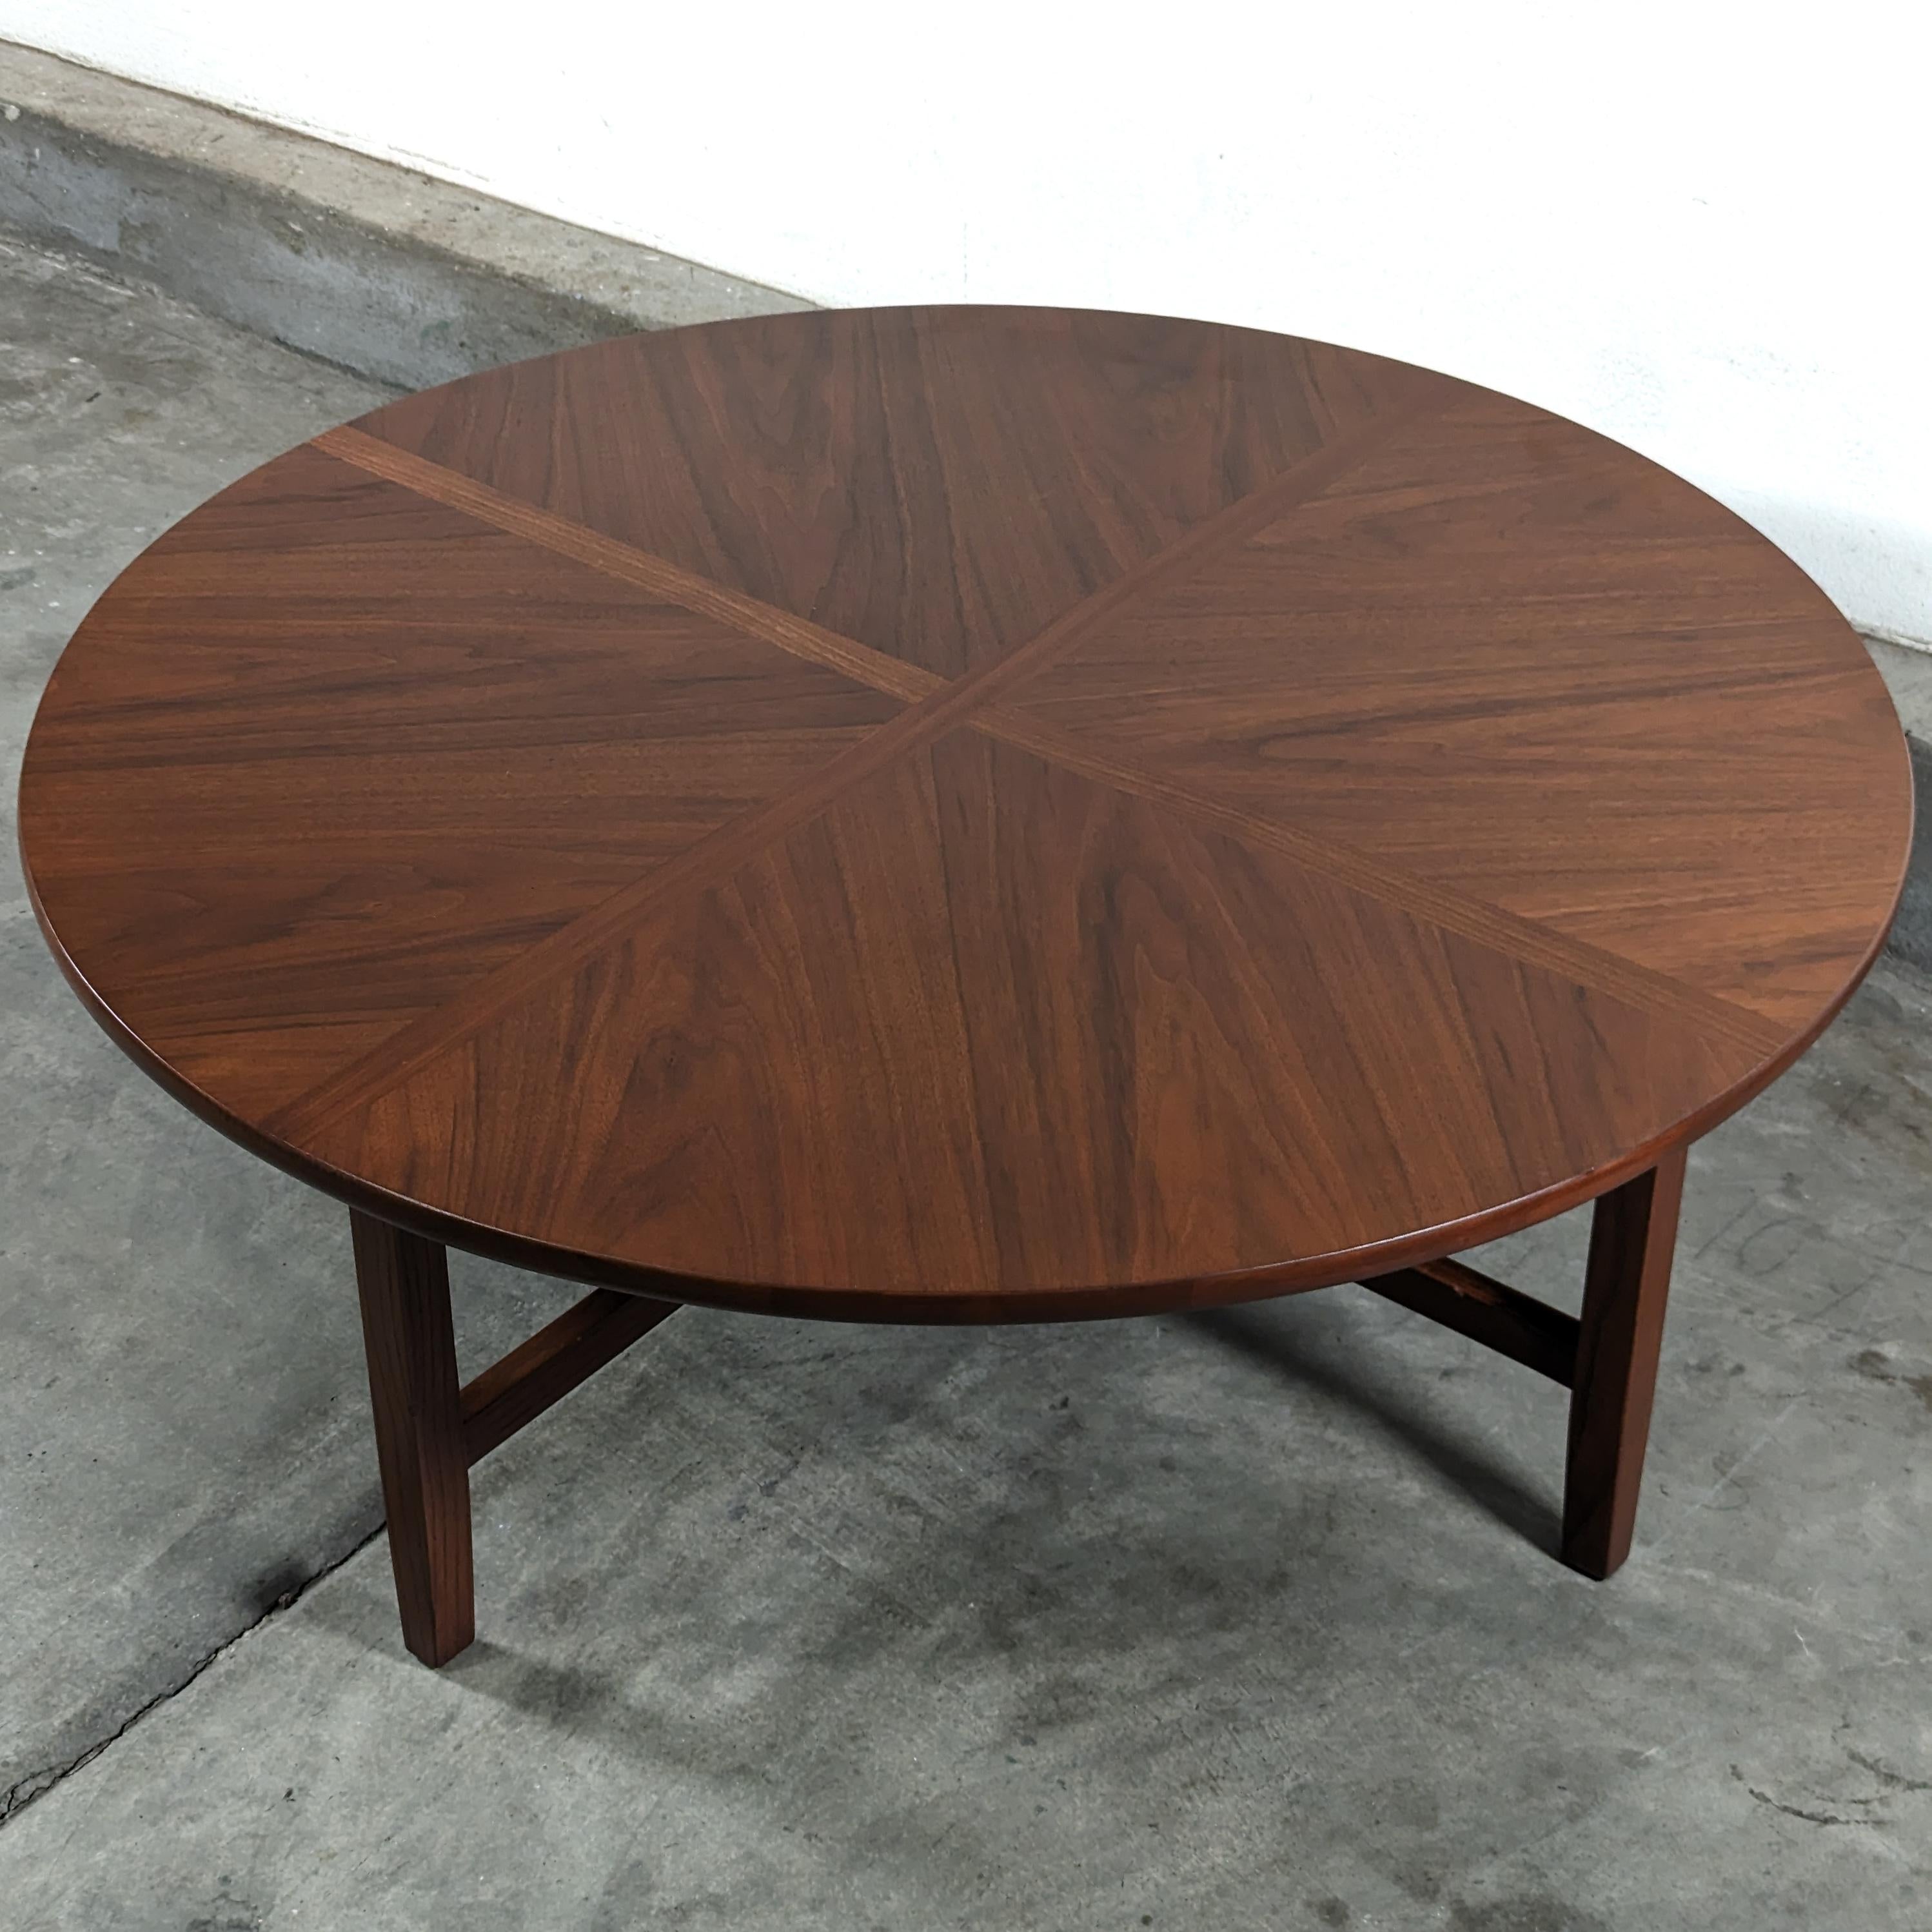 American Refinished Mid Century Modern Walnut & Oak Coffee Table, c1960s For Sale